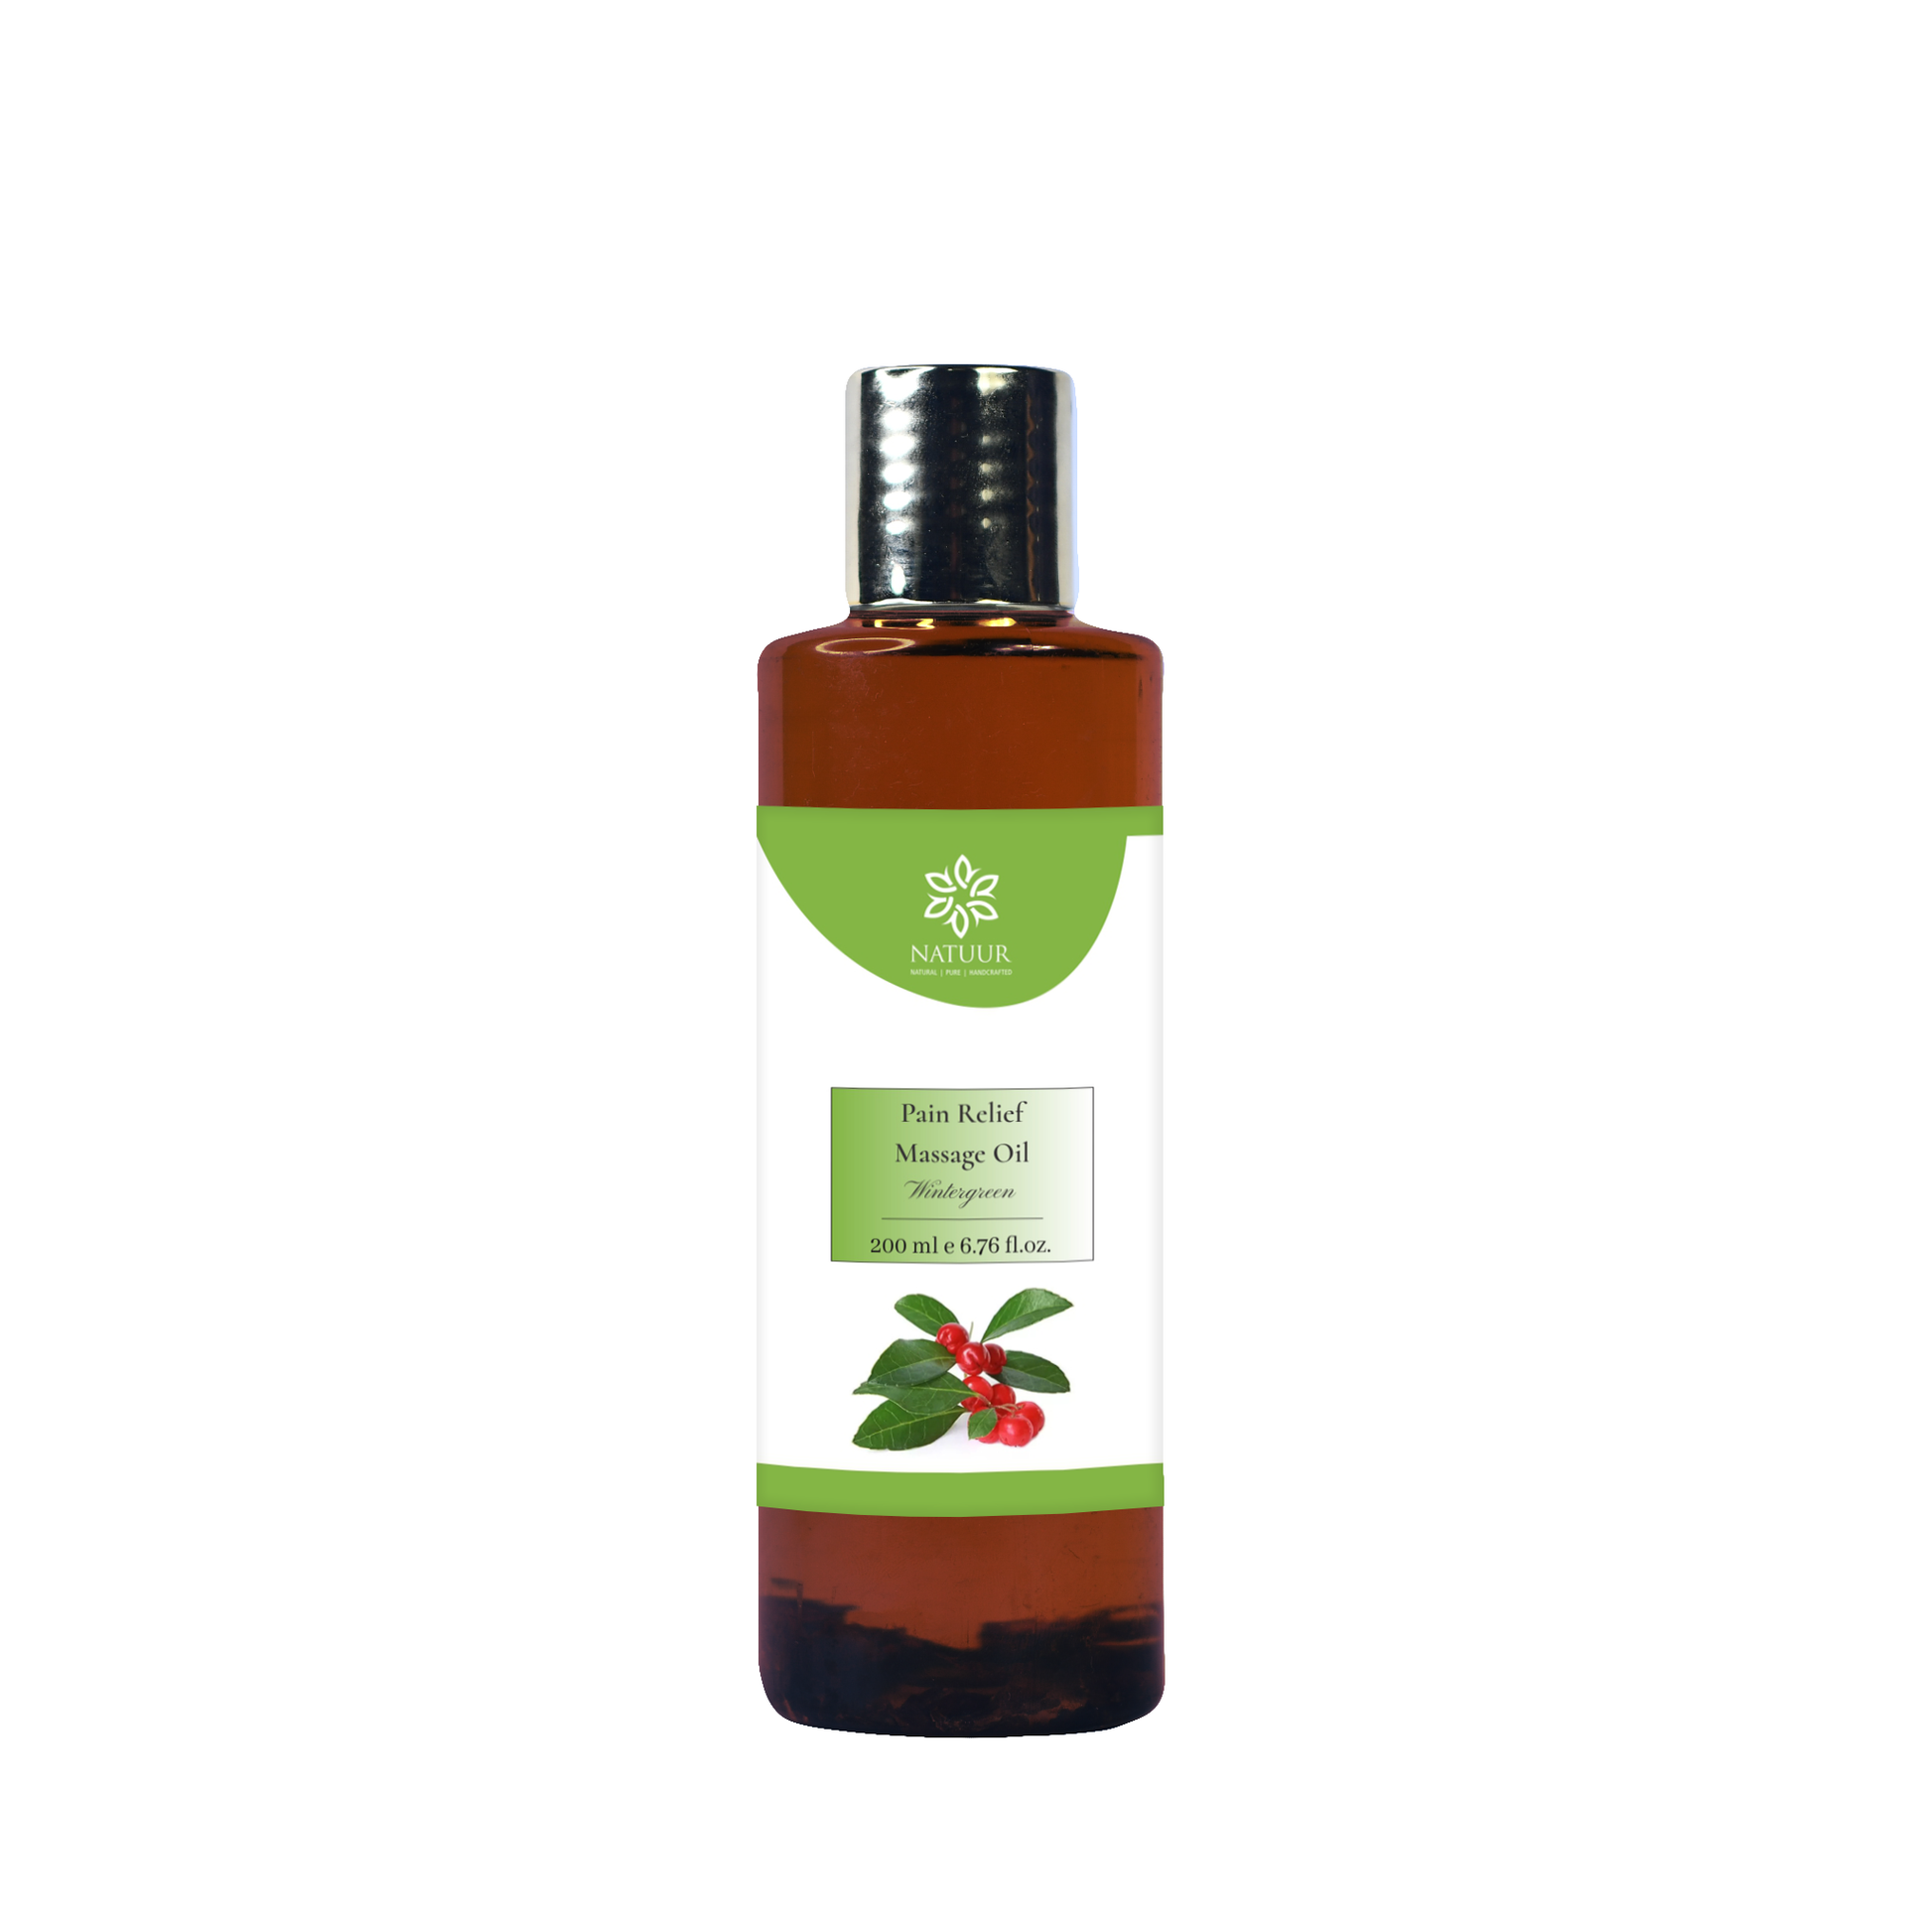 Pain relief Massage Oil- Wintergreen - Natuur.in